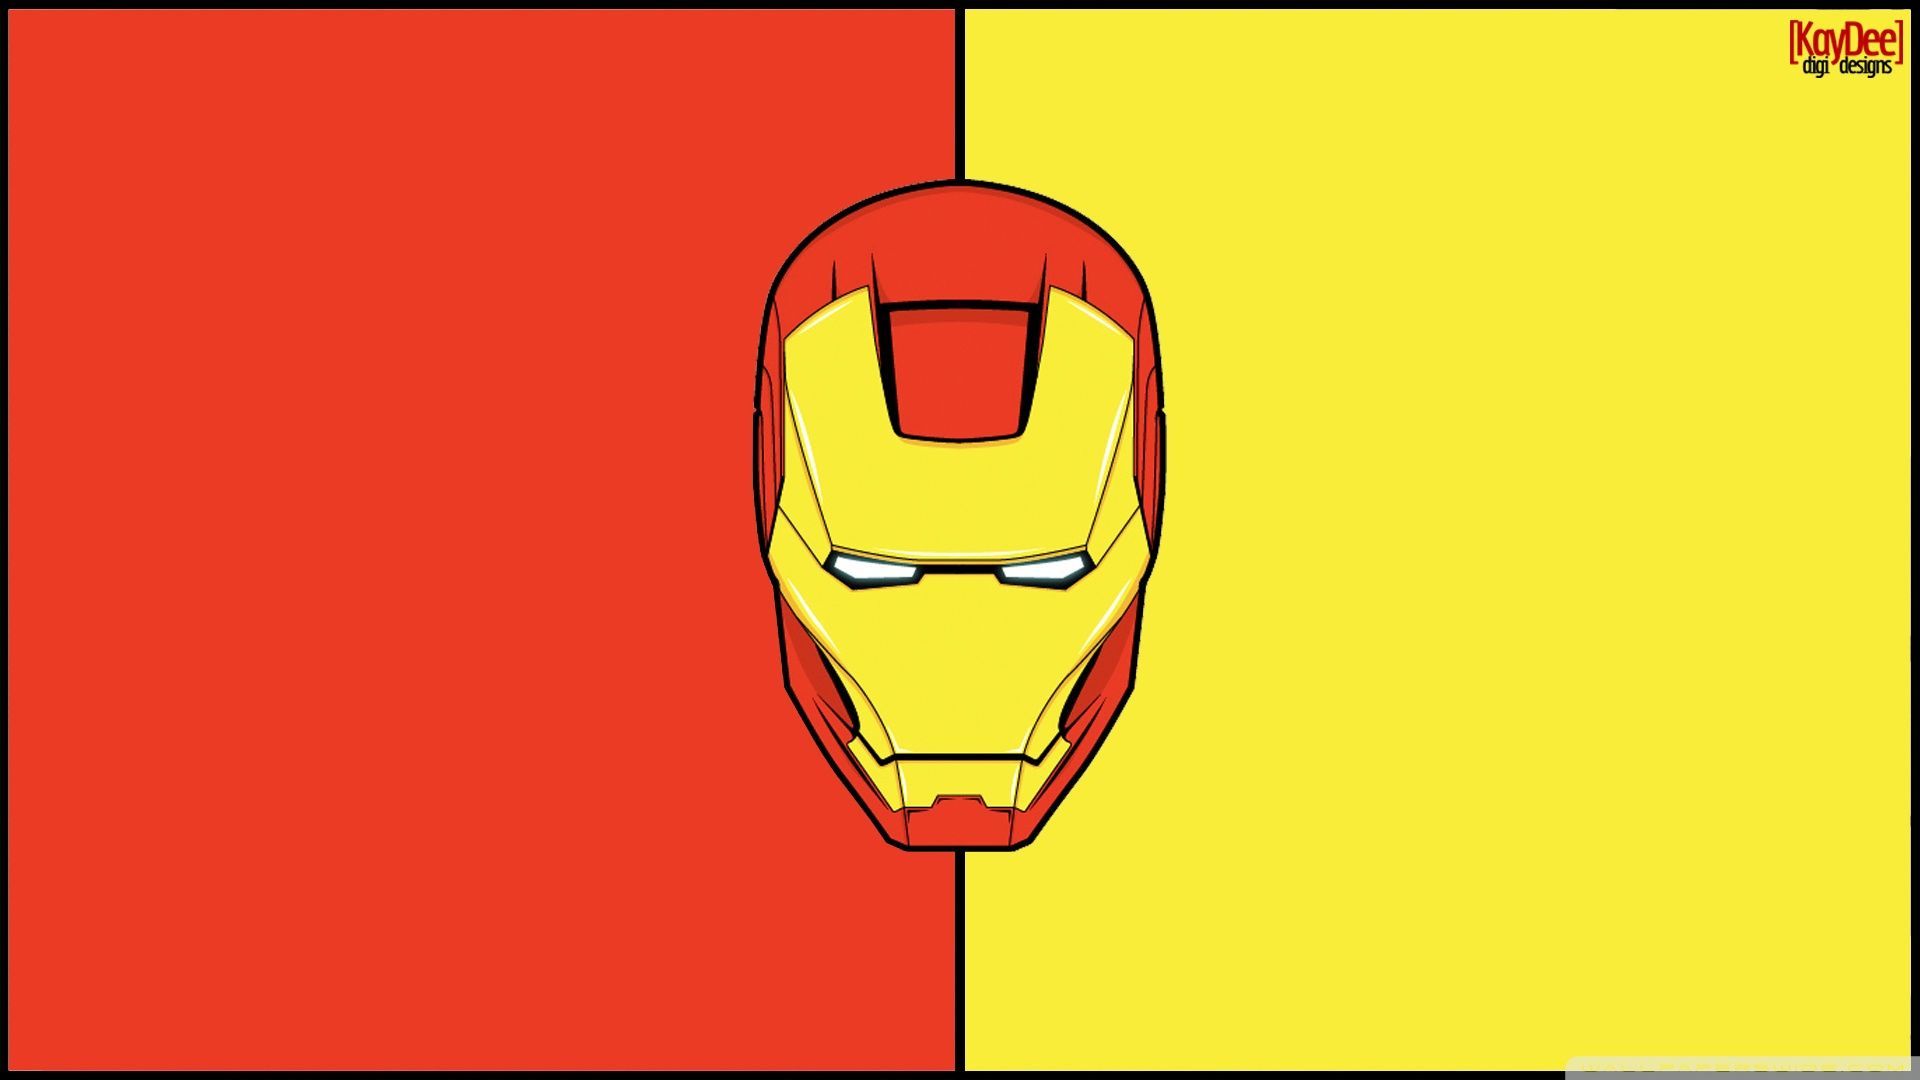 Cute Iron Man Cartoon Wallpapers